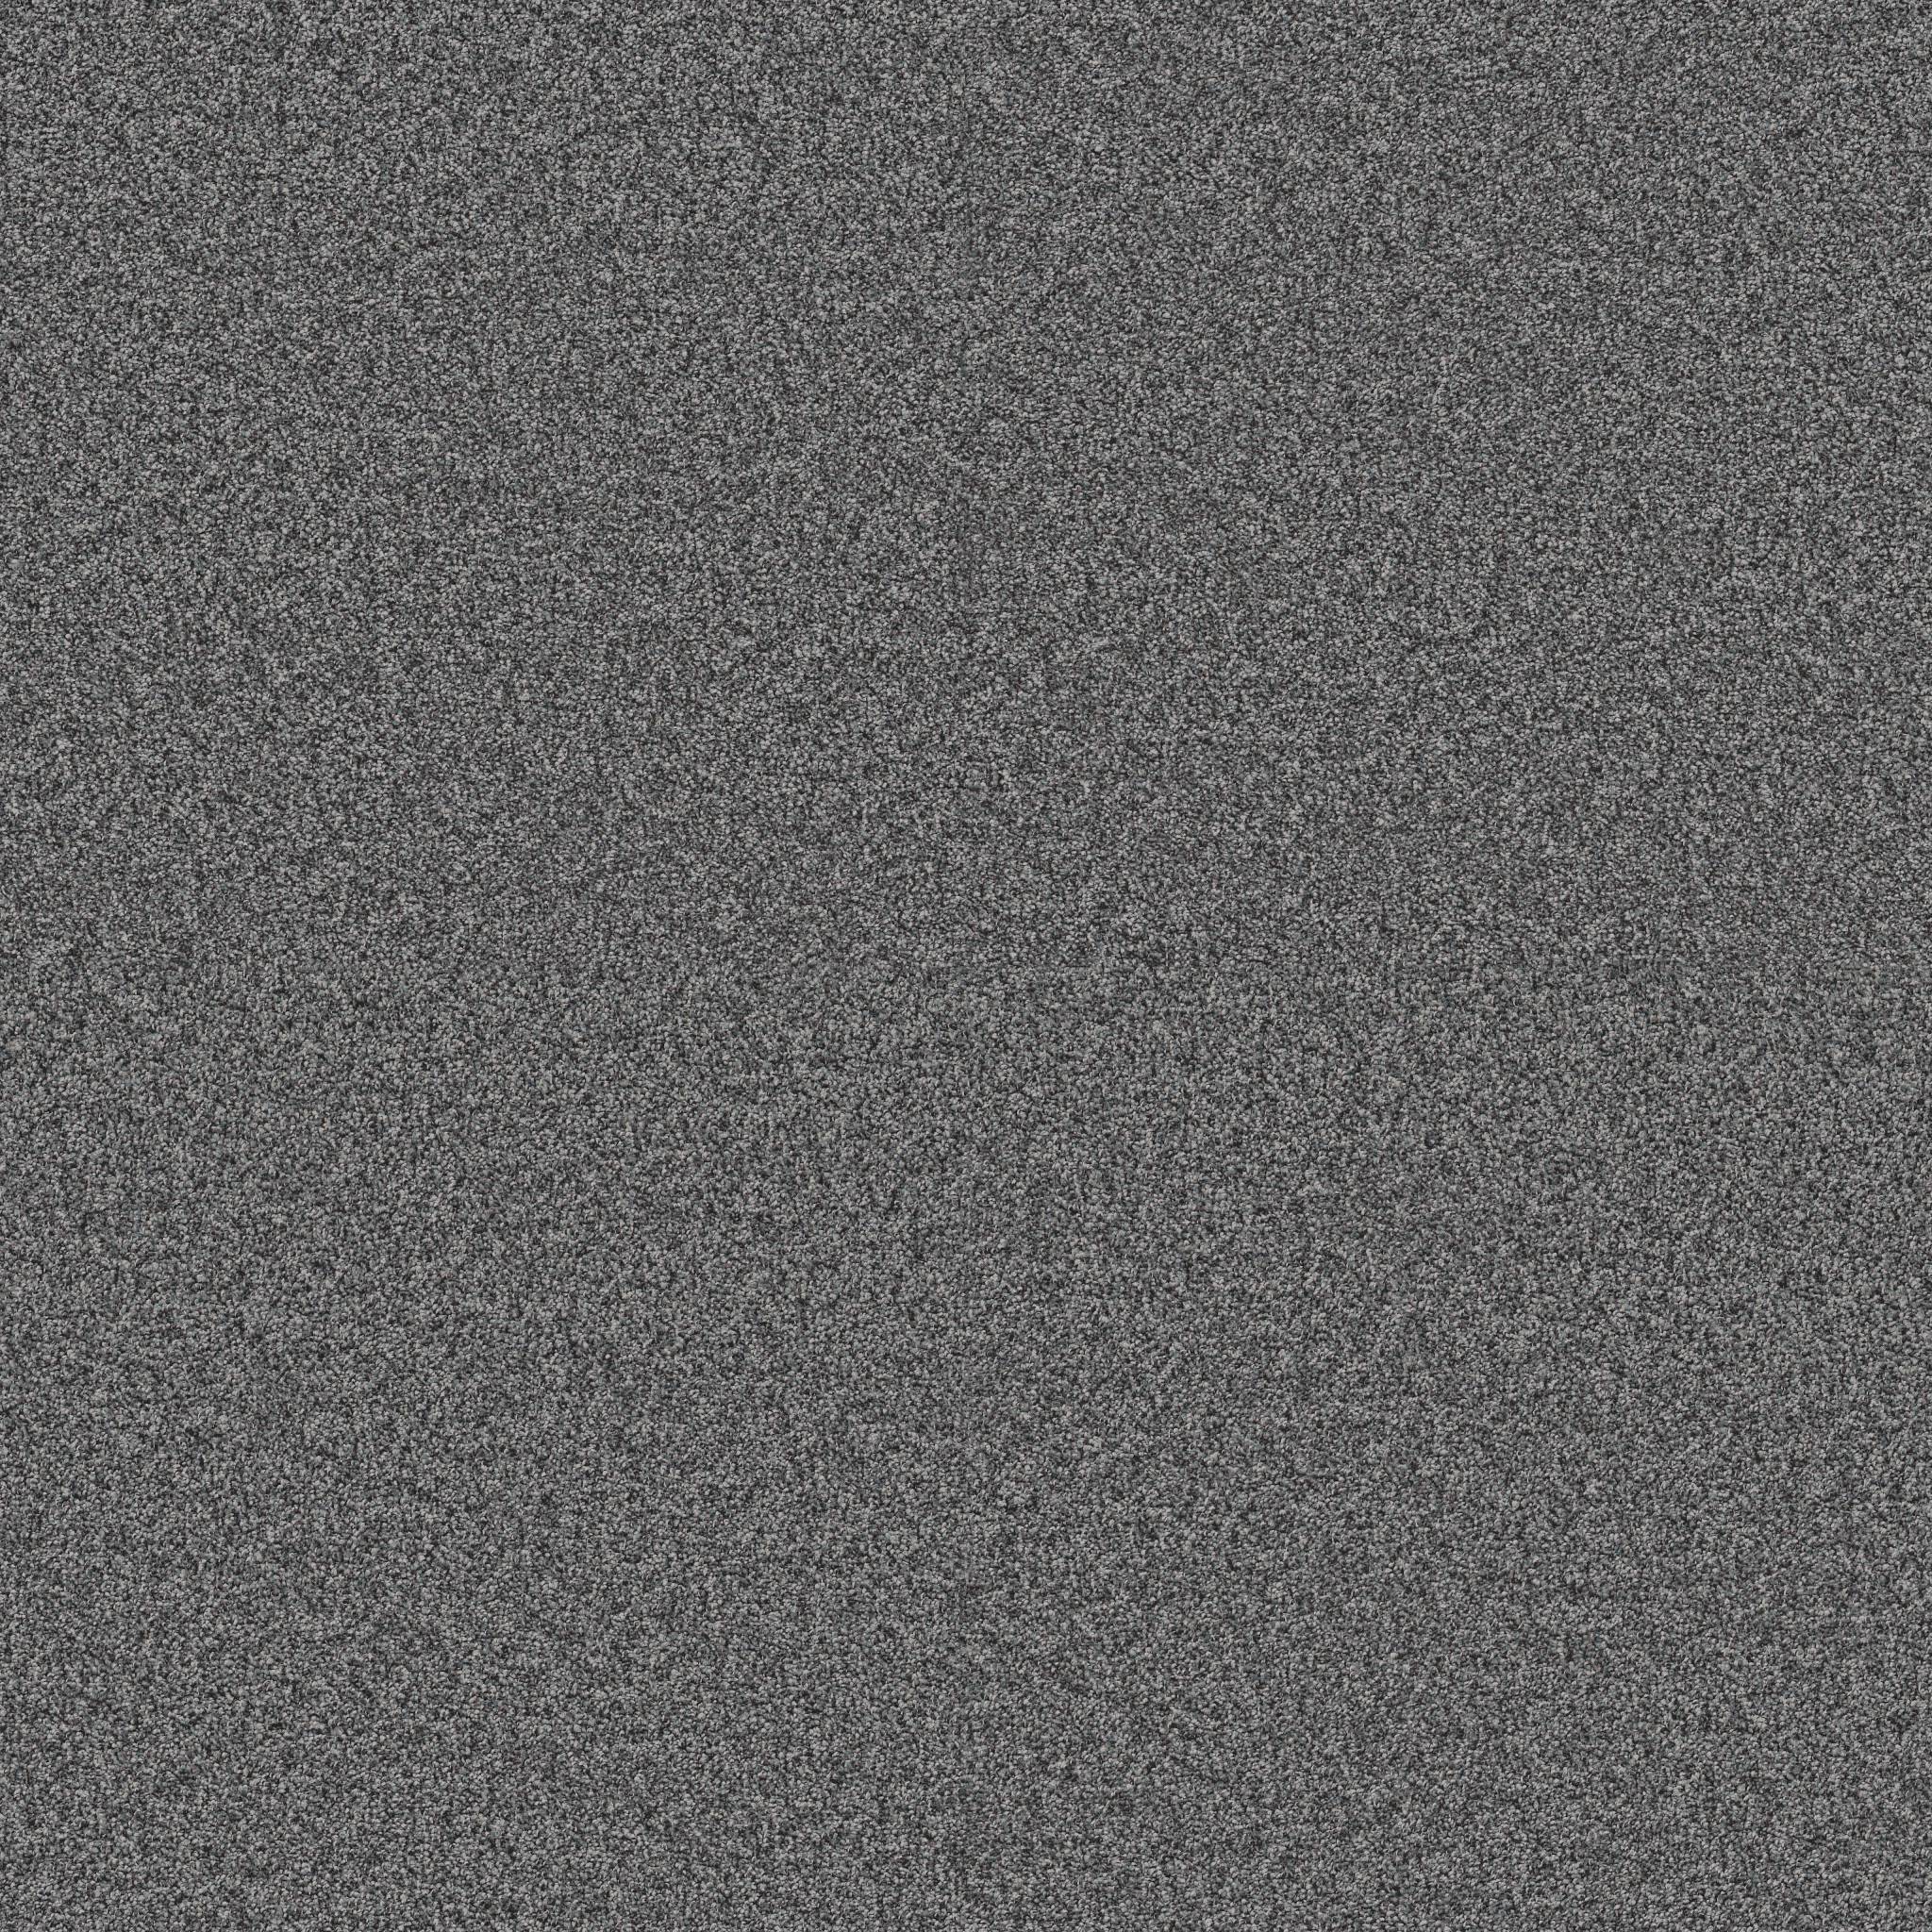 Kaleidoscope Carpet - Aqua Mist Zoomed Swatch Image